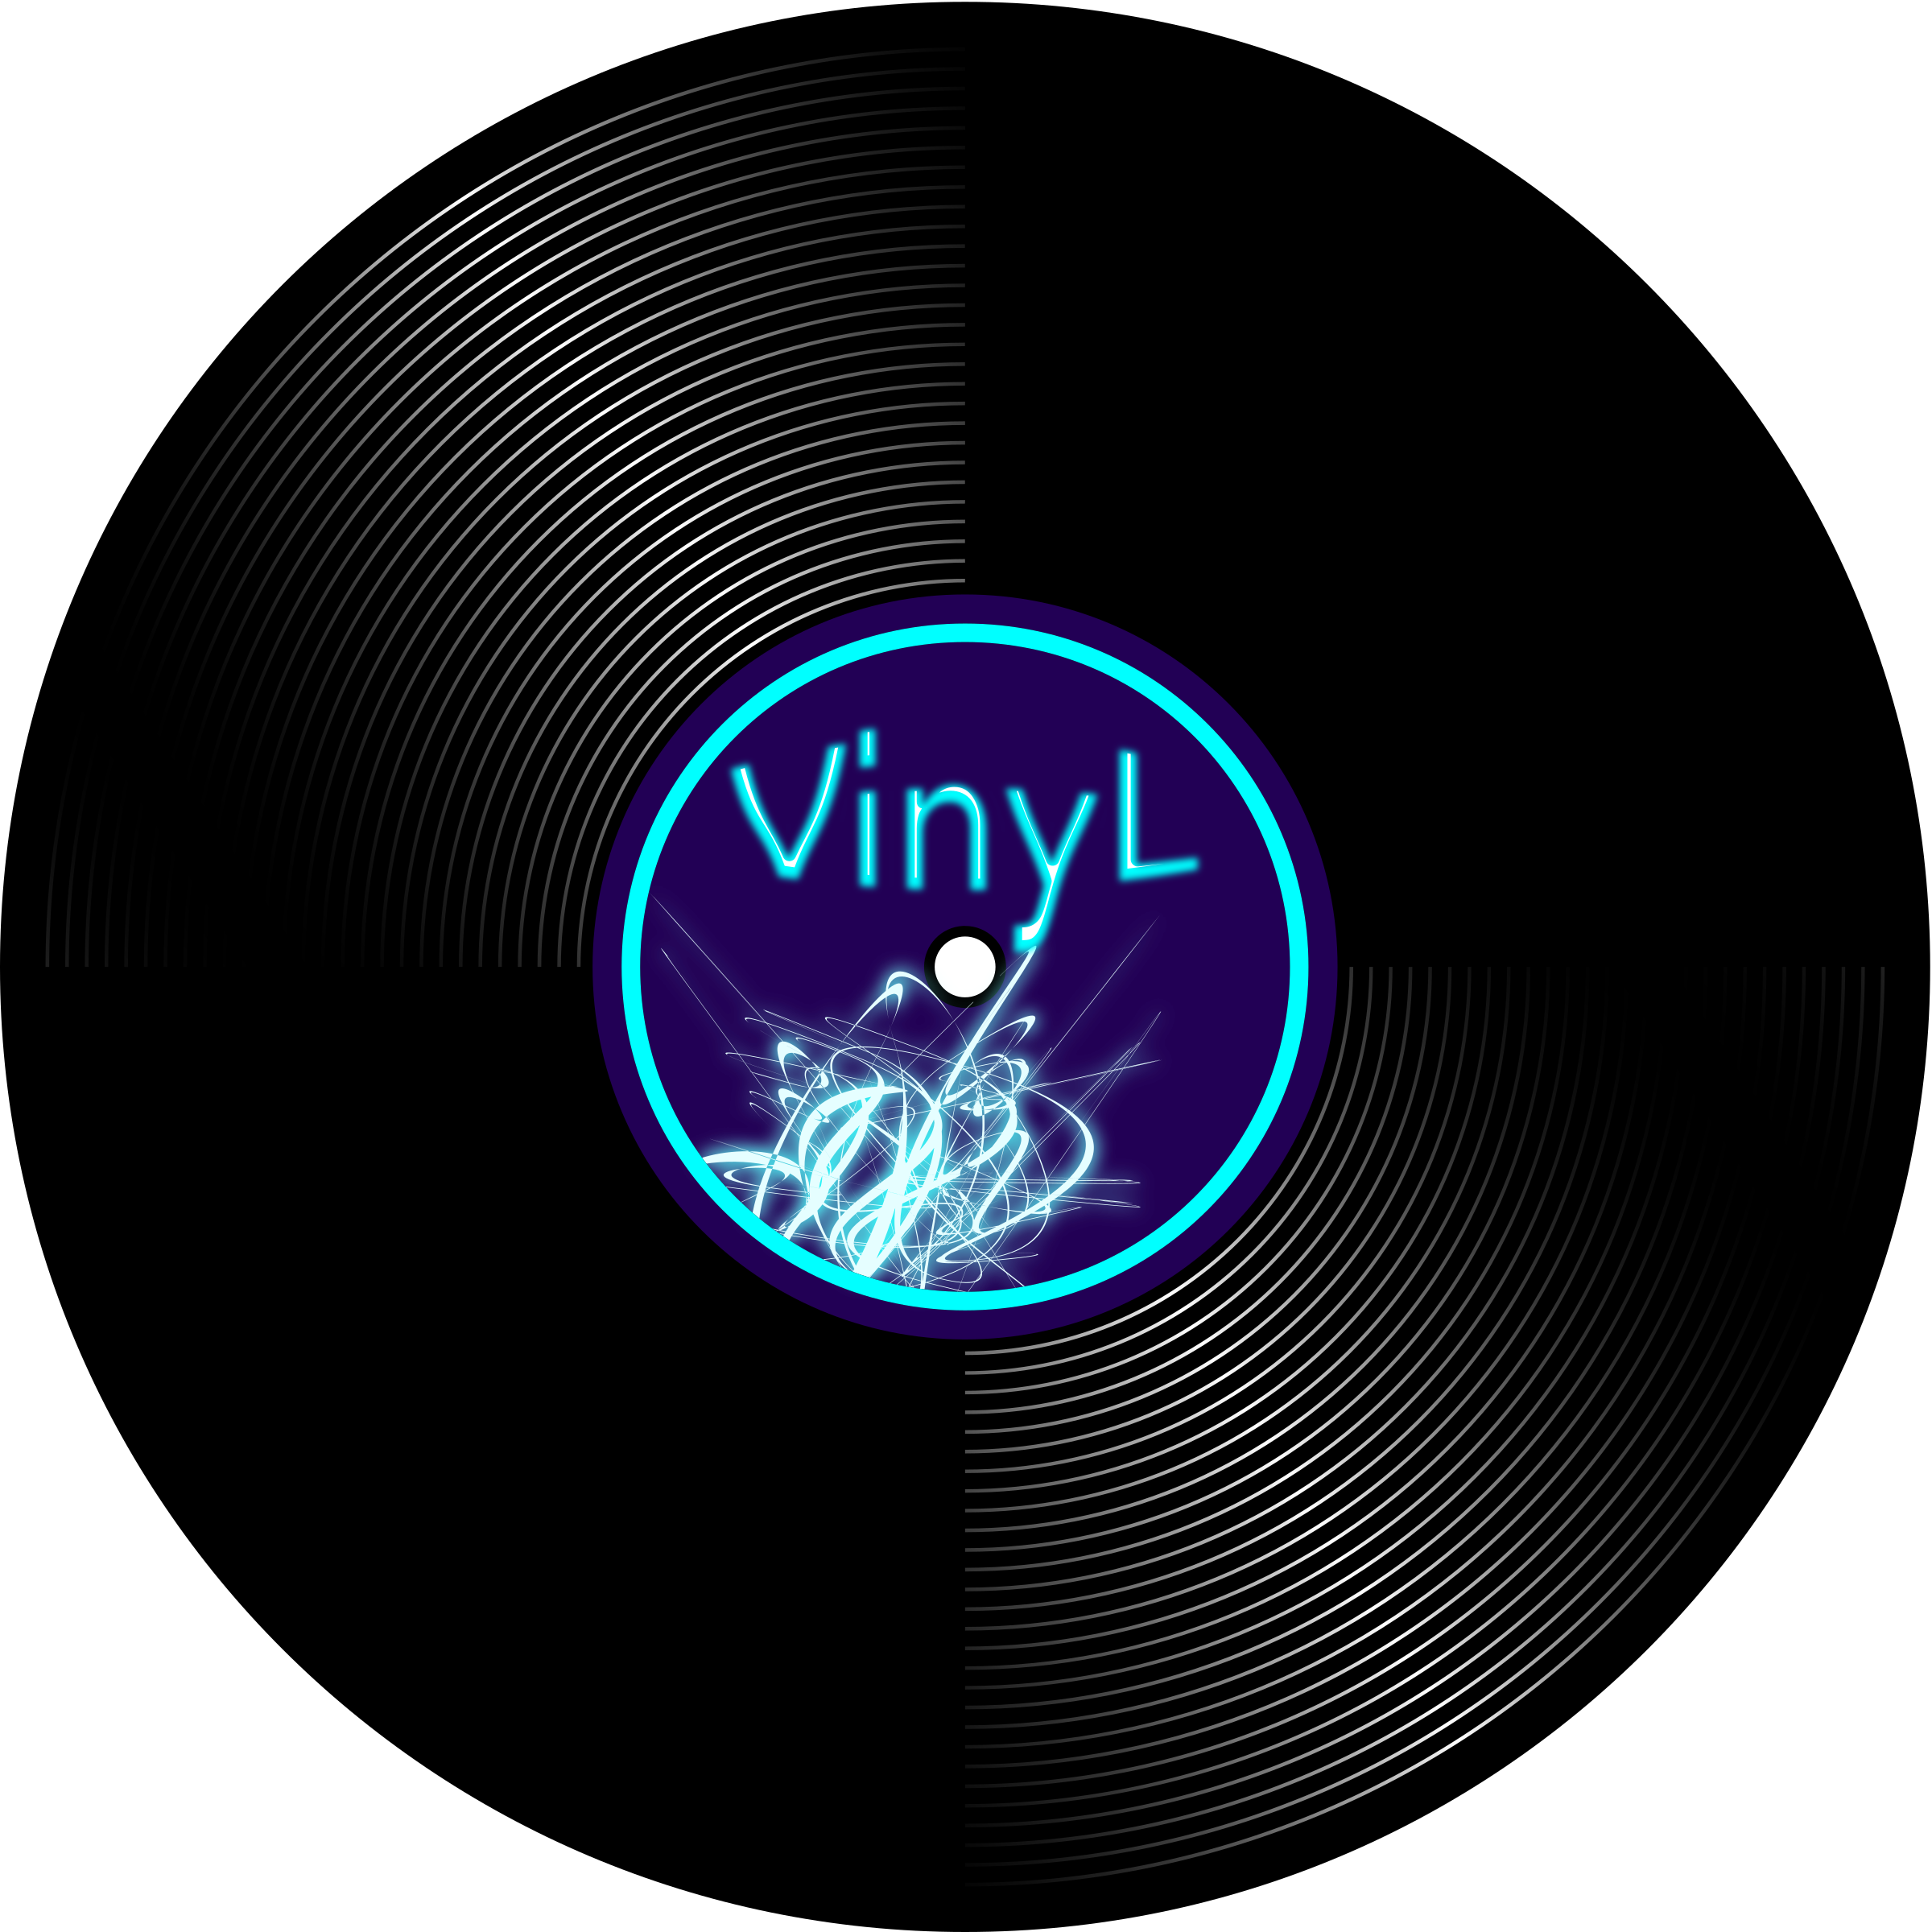 Download Vinyl Record Vector Graphics image - Free stock photo ...